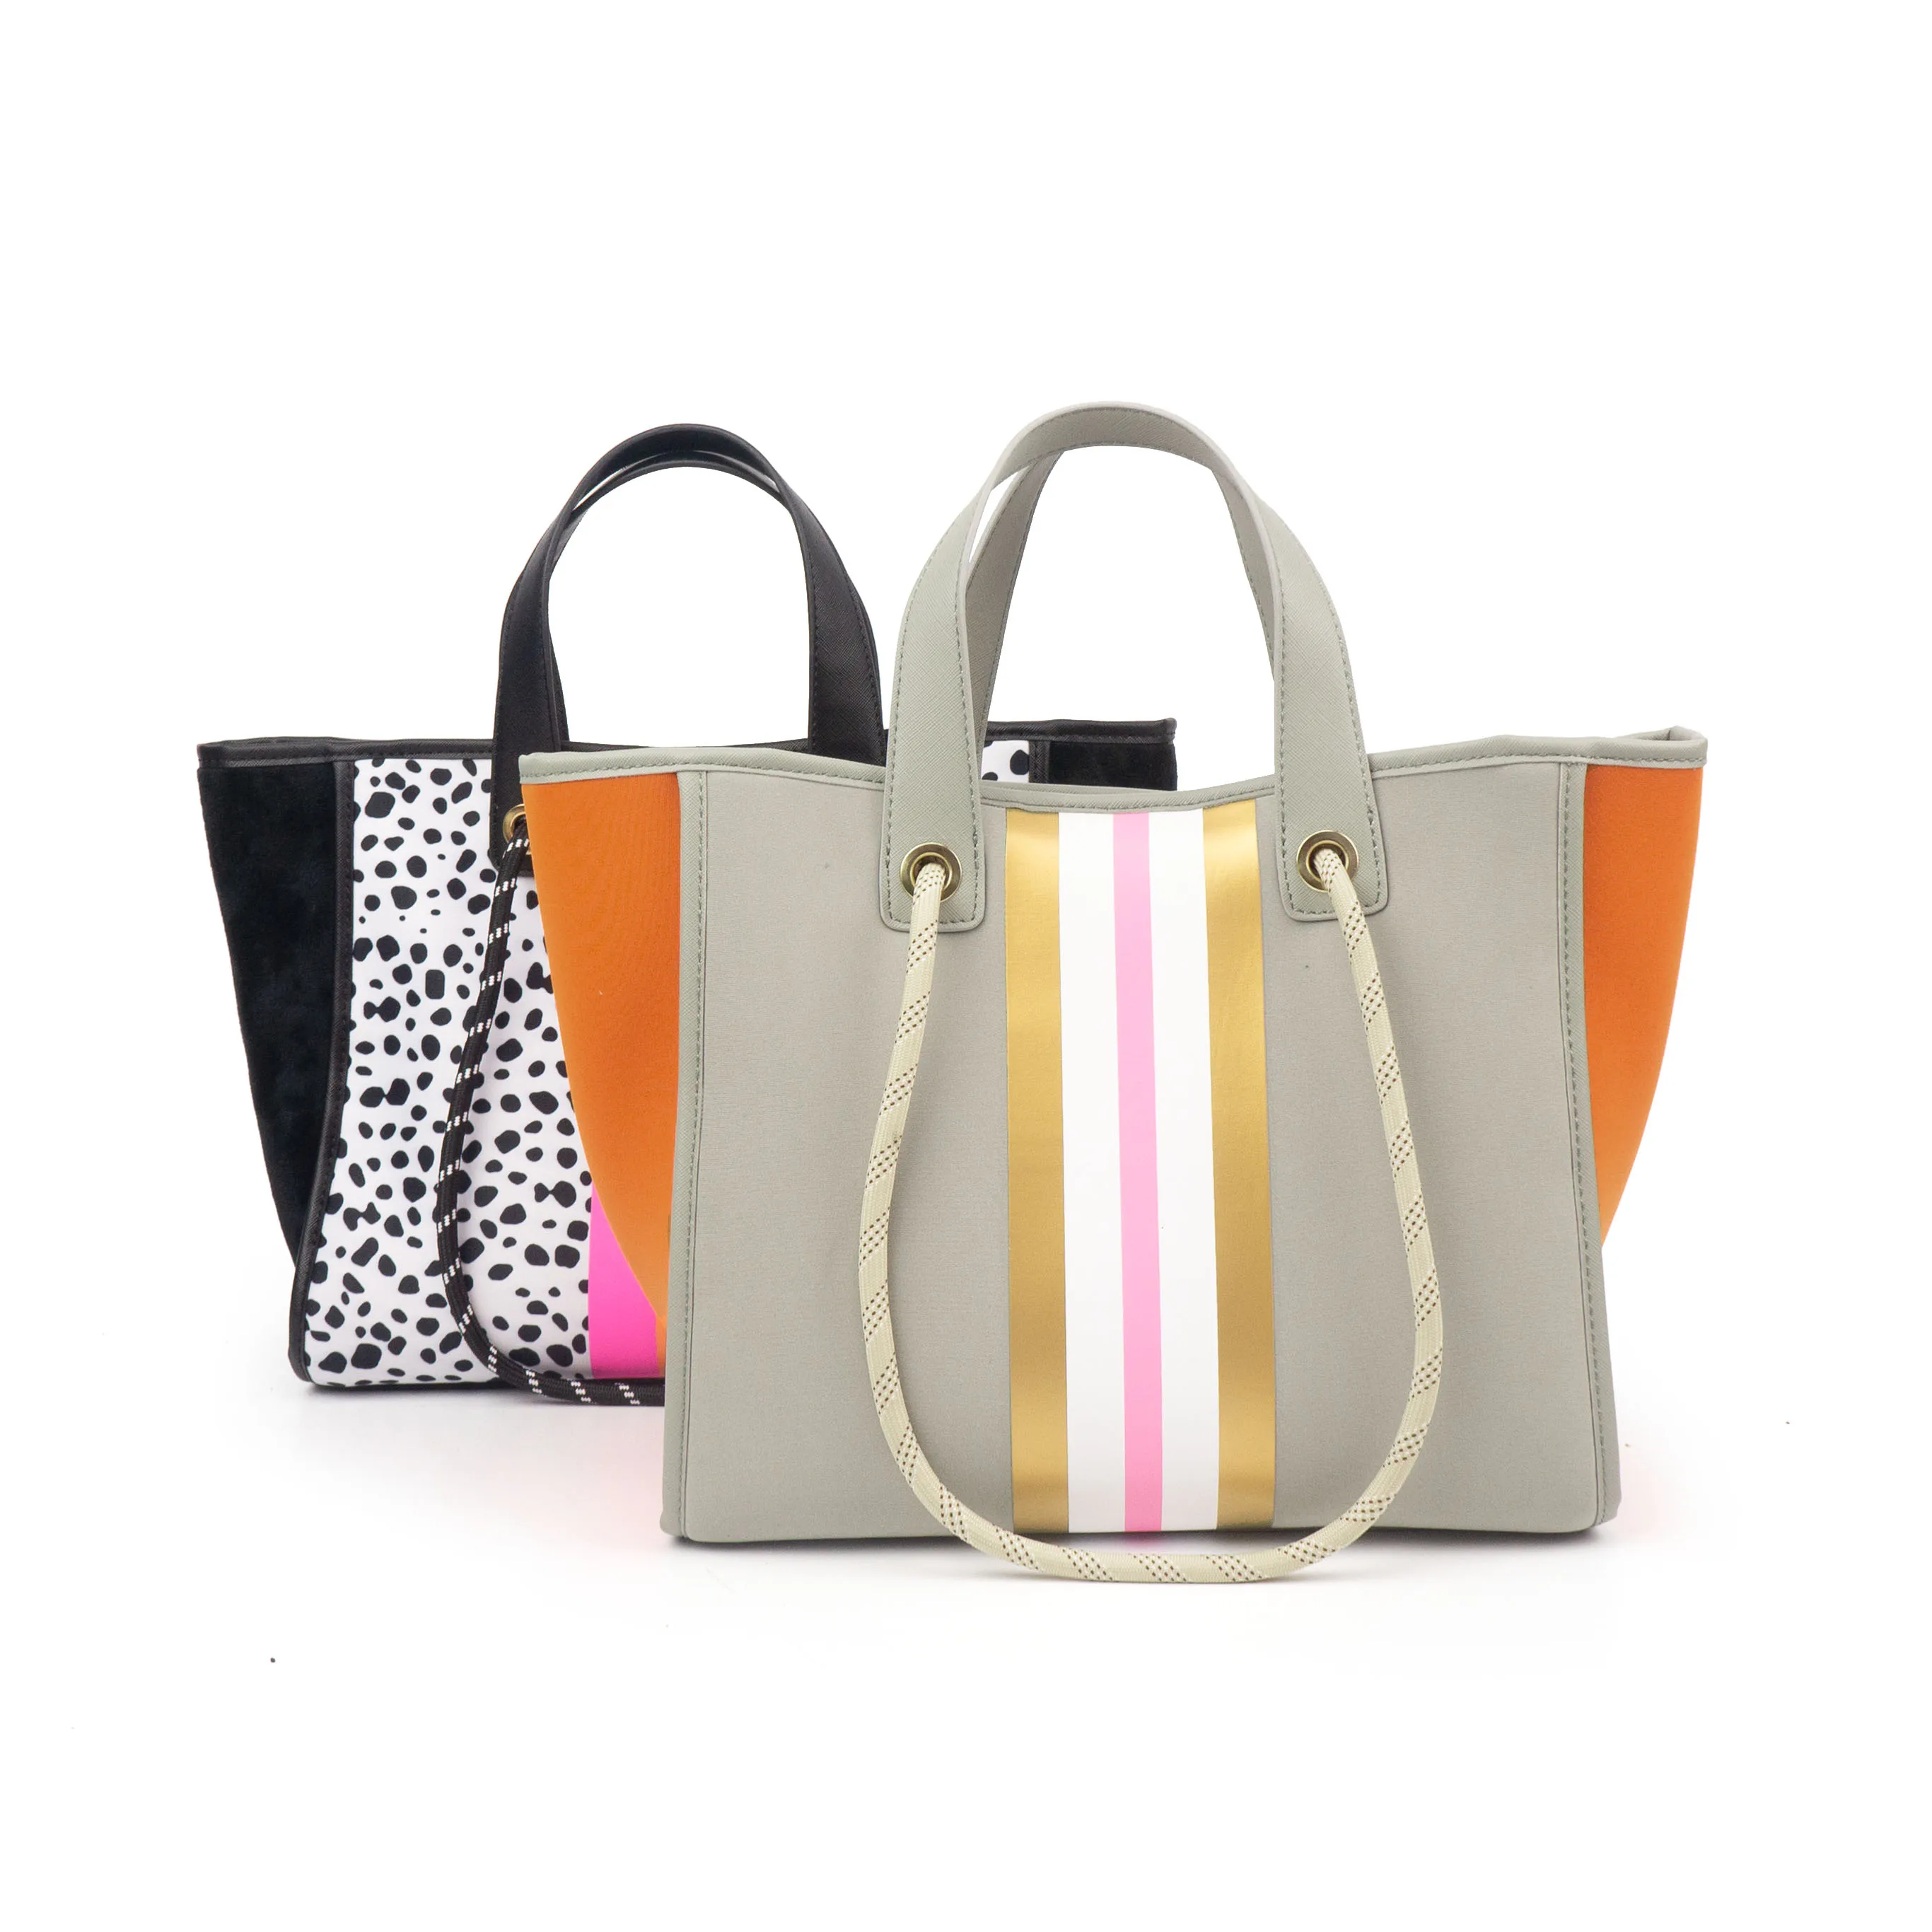 

2021 Hot selling neoprene bag beach bag tote handbag bags for women, Sample or customized